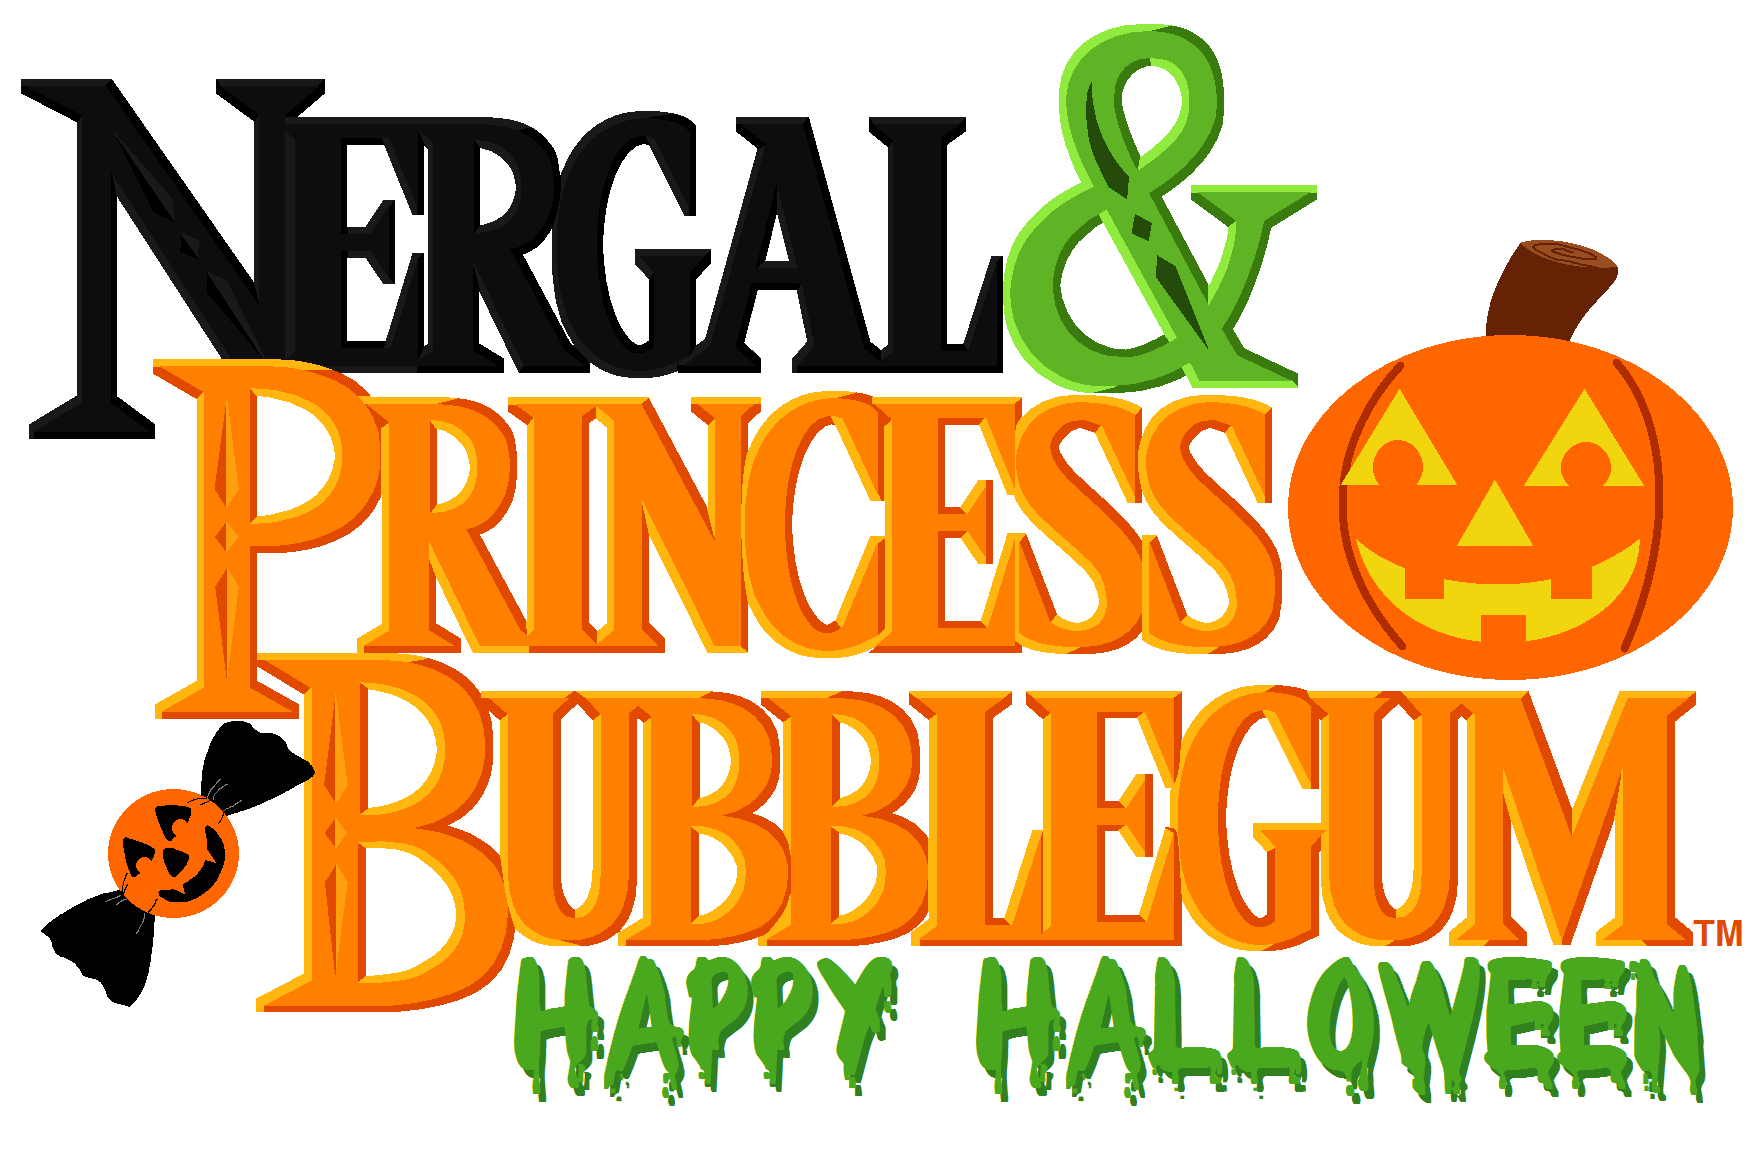 Cartoon Network HD Logo - Nergal And Princess Bubblegum Happy Halloween Logo Cartoon Network ...